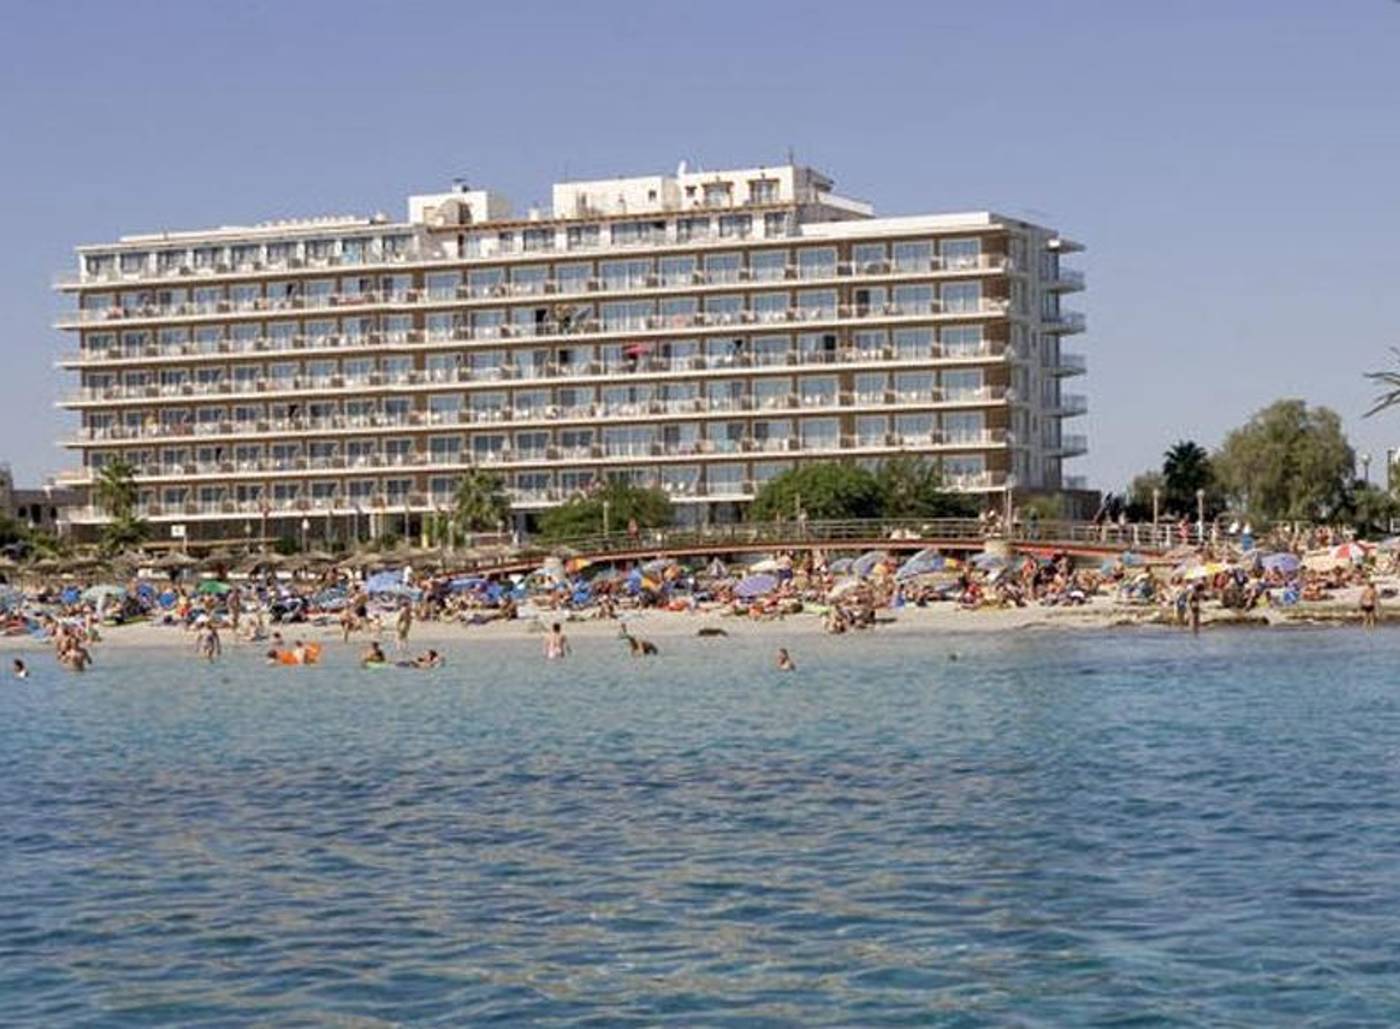 Playa Moreia in Balearics, Majorca, Spain